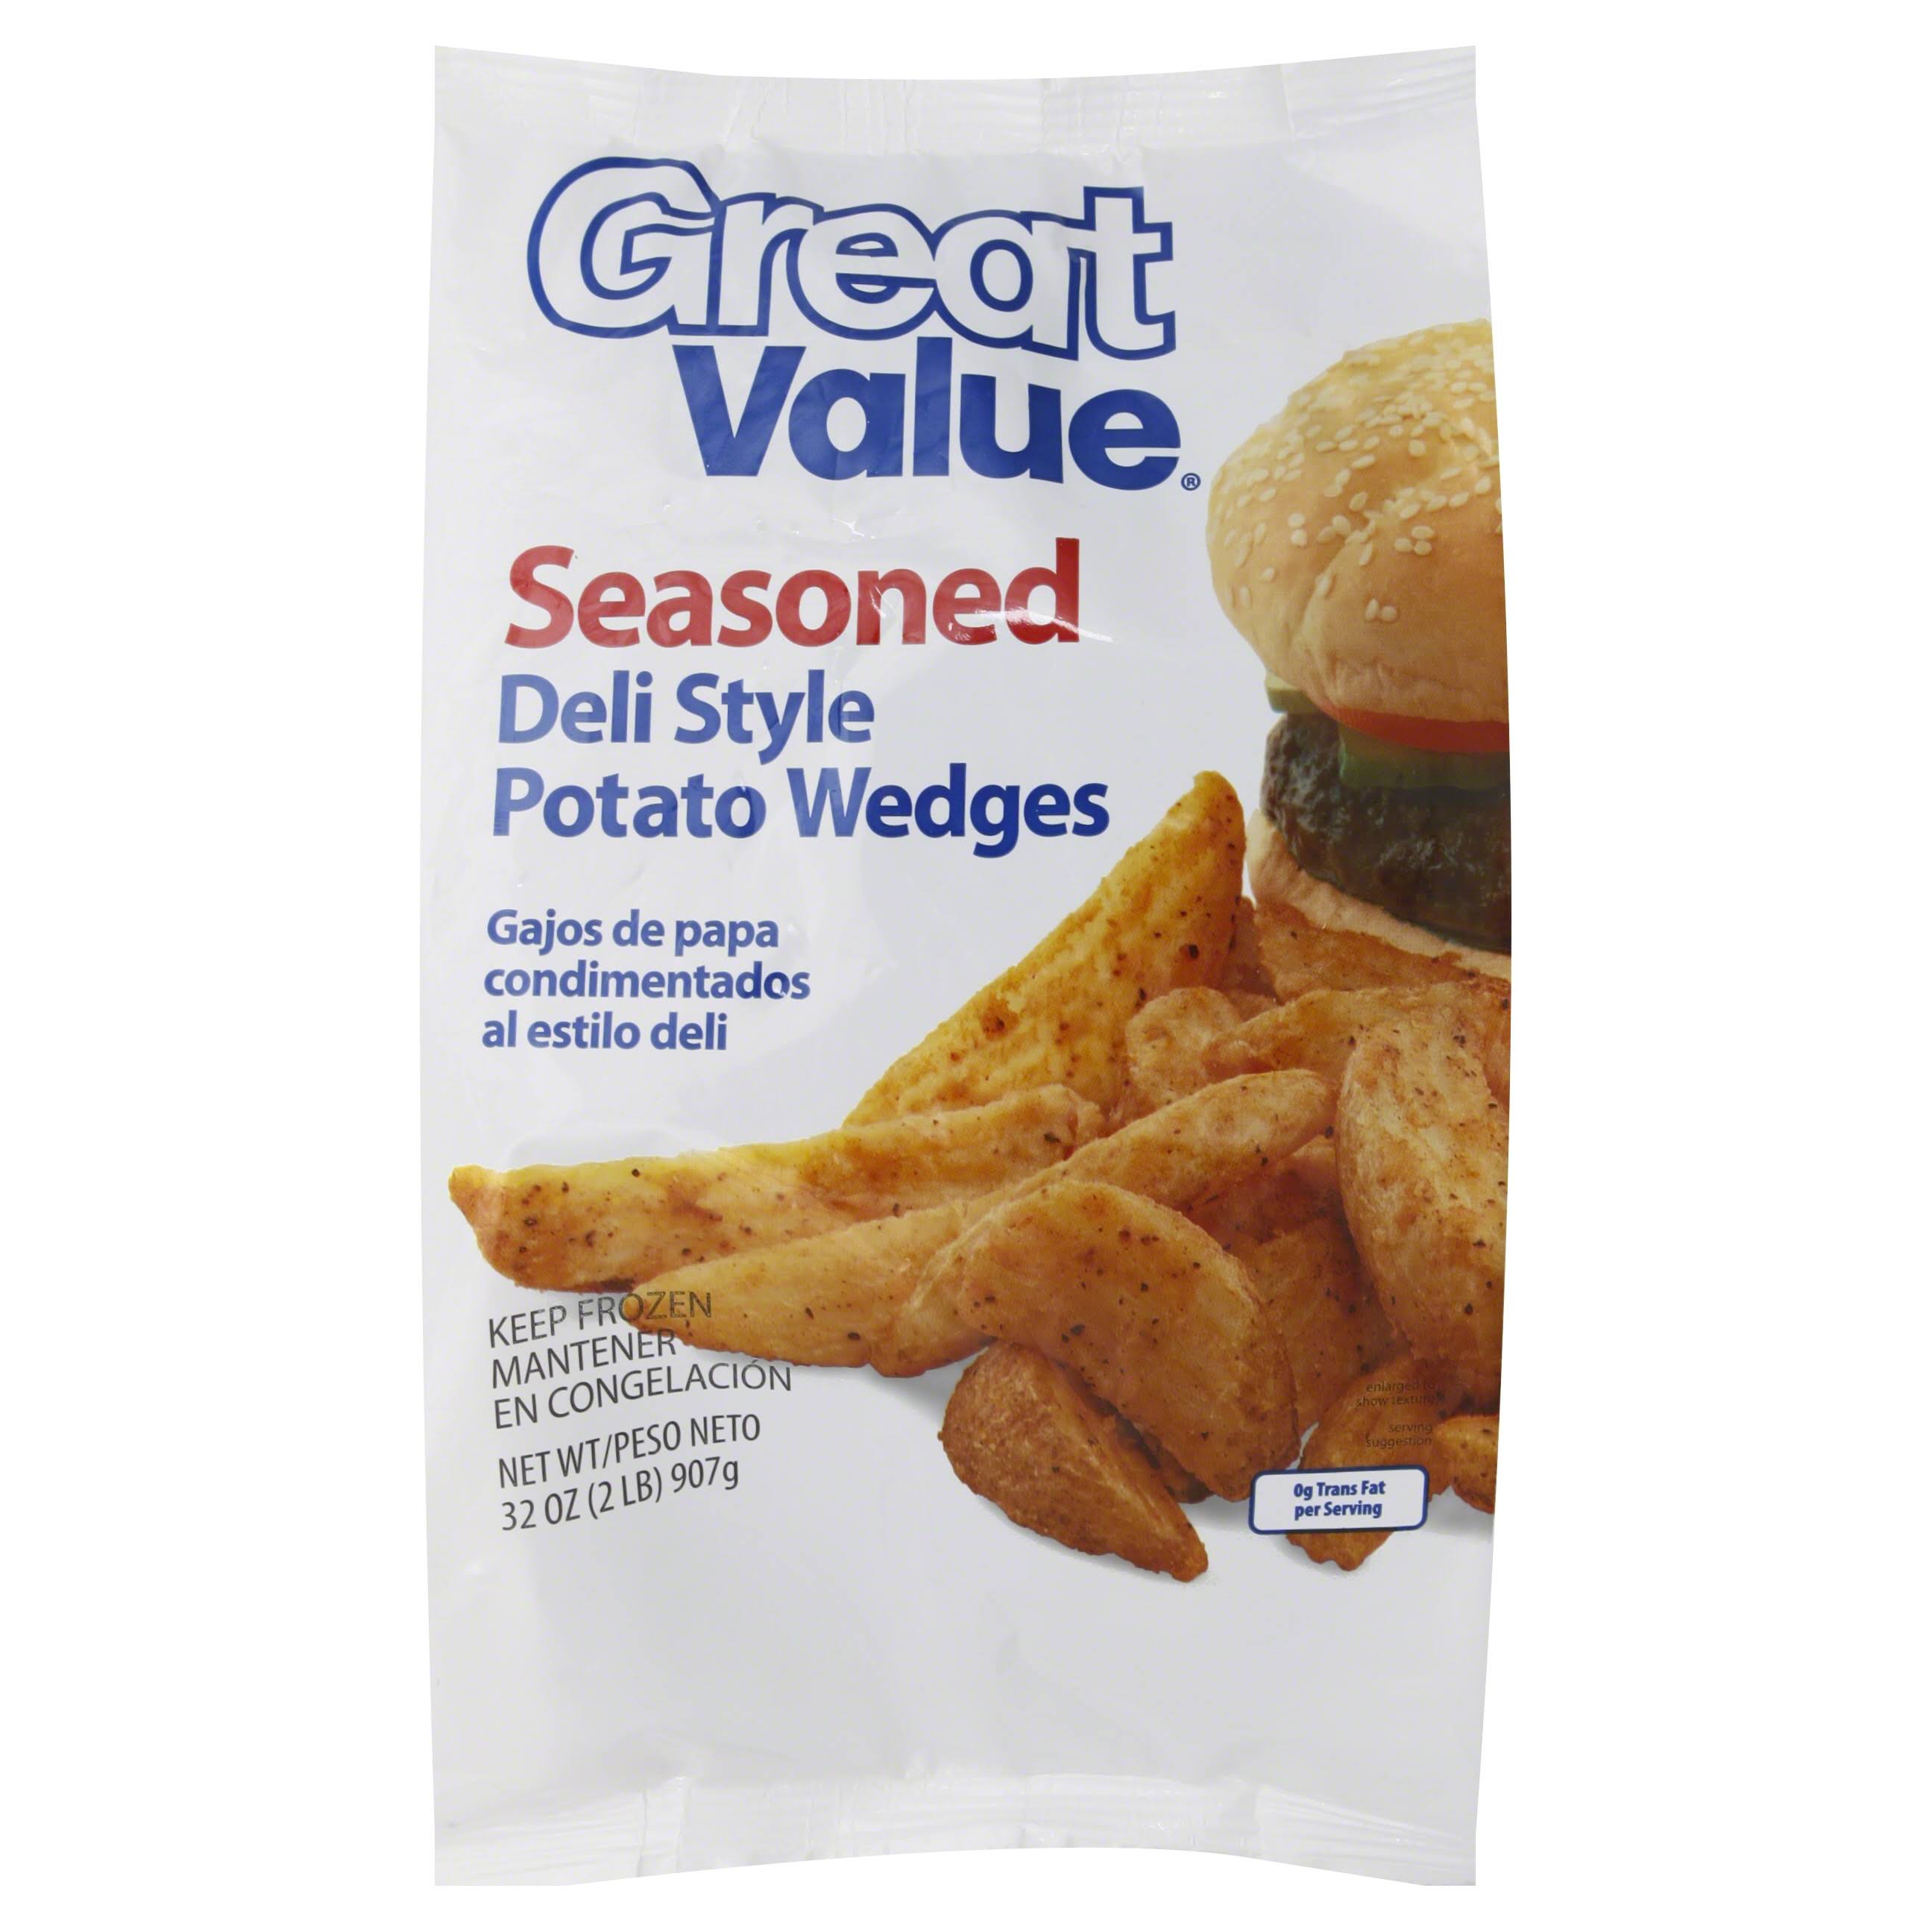 Great Value Potato Wedges, Deli Style, Seasoned - 32 oz